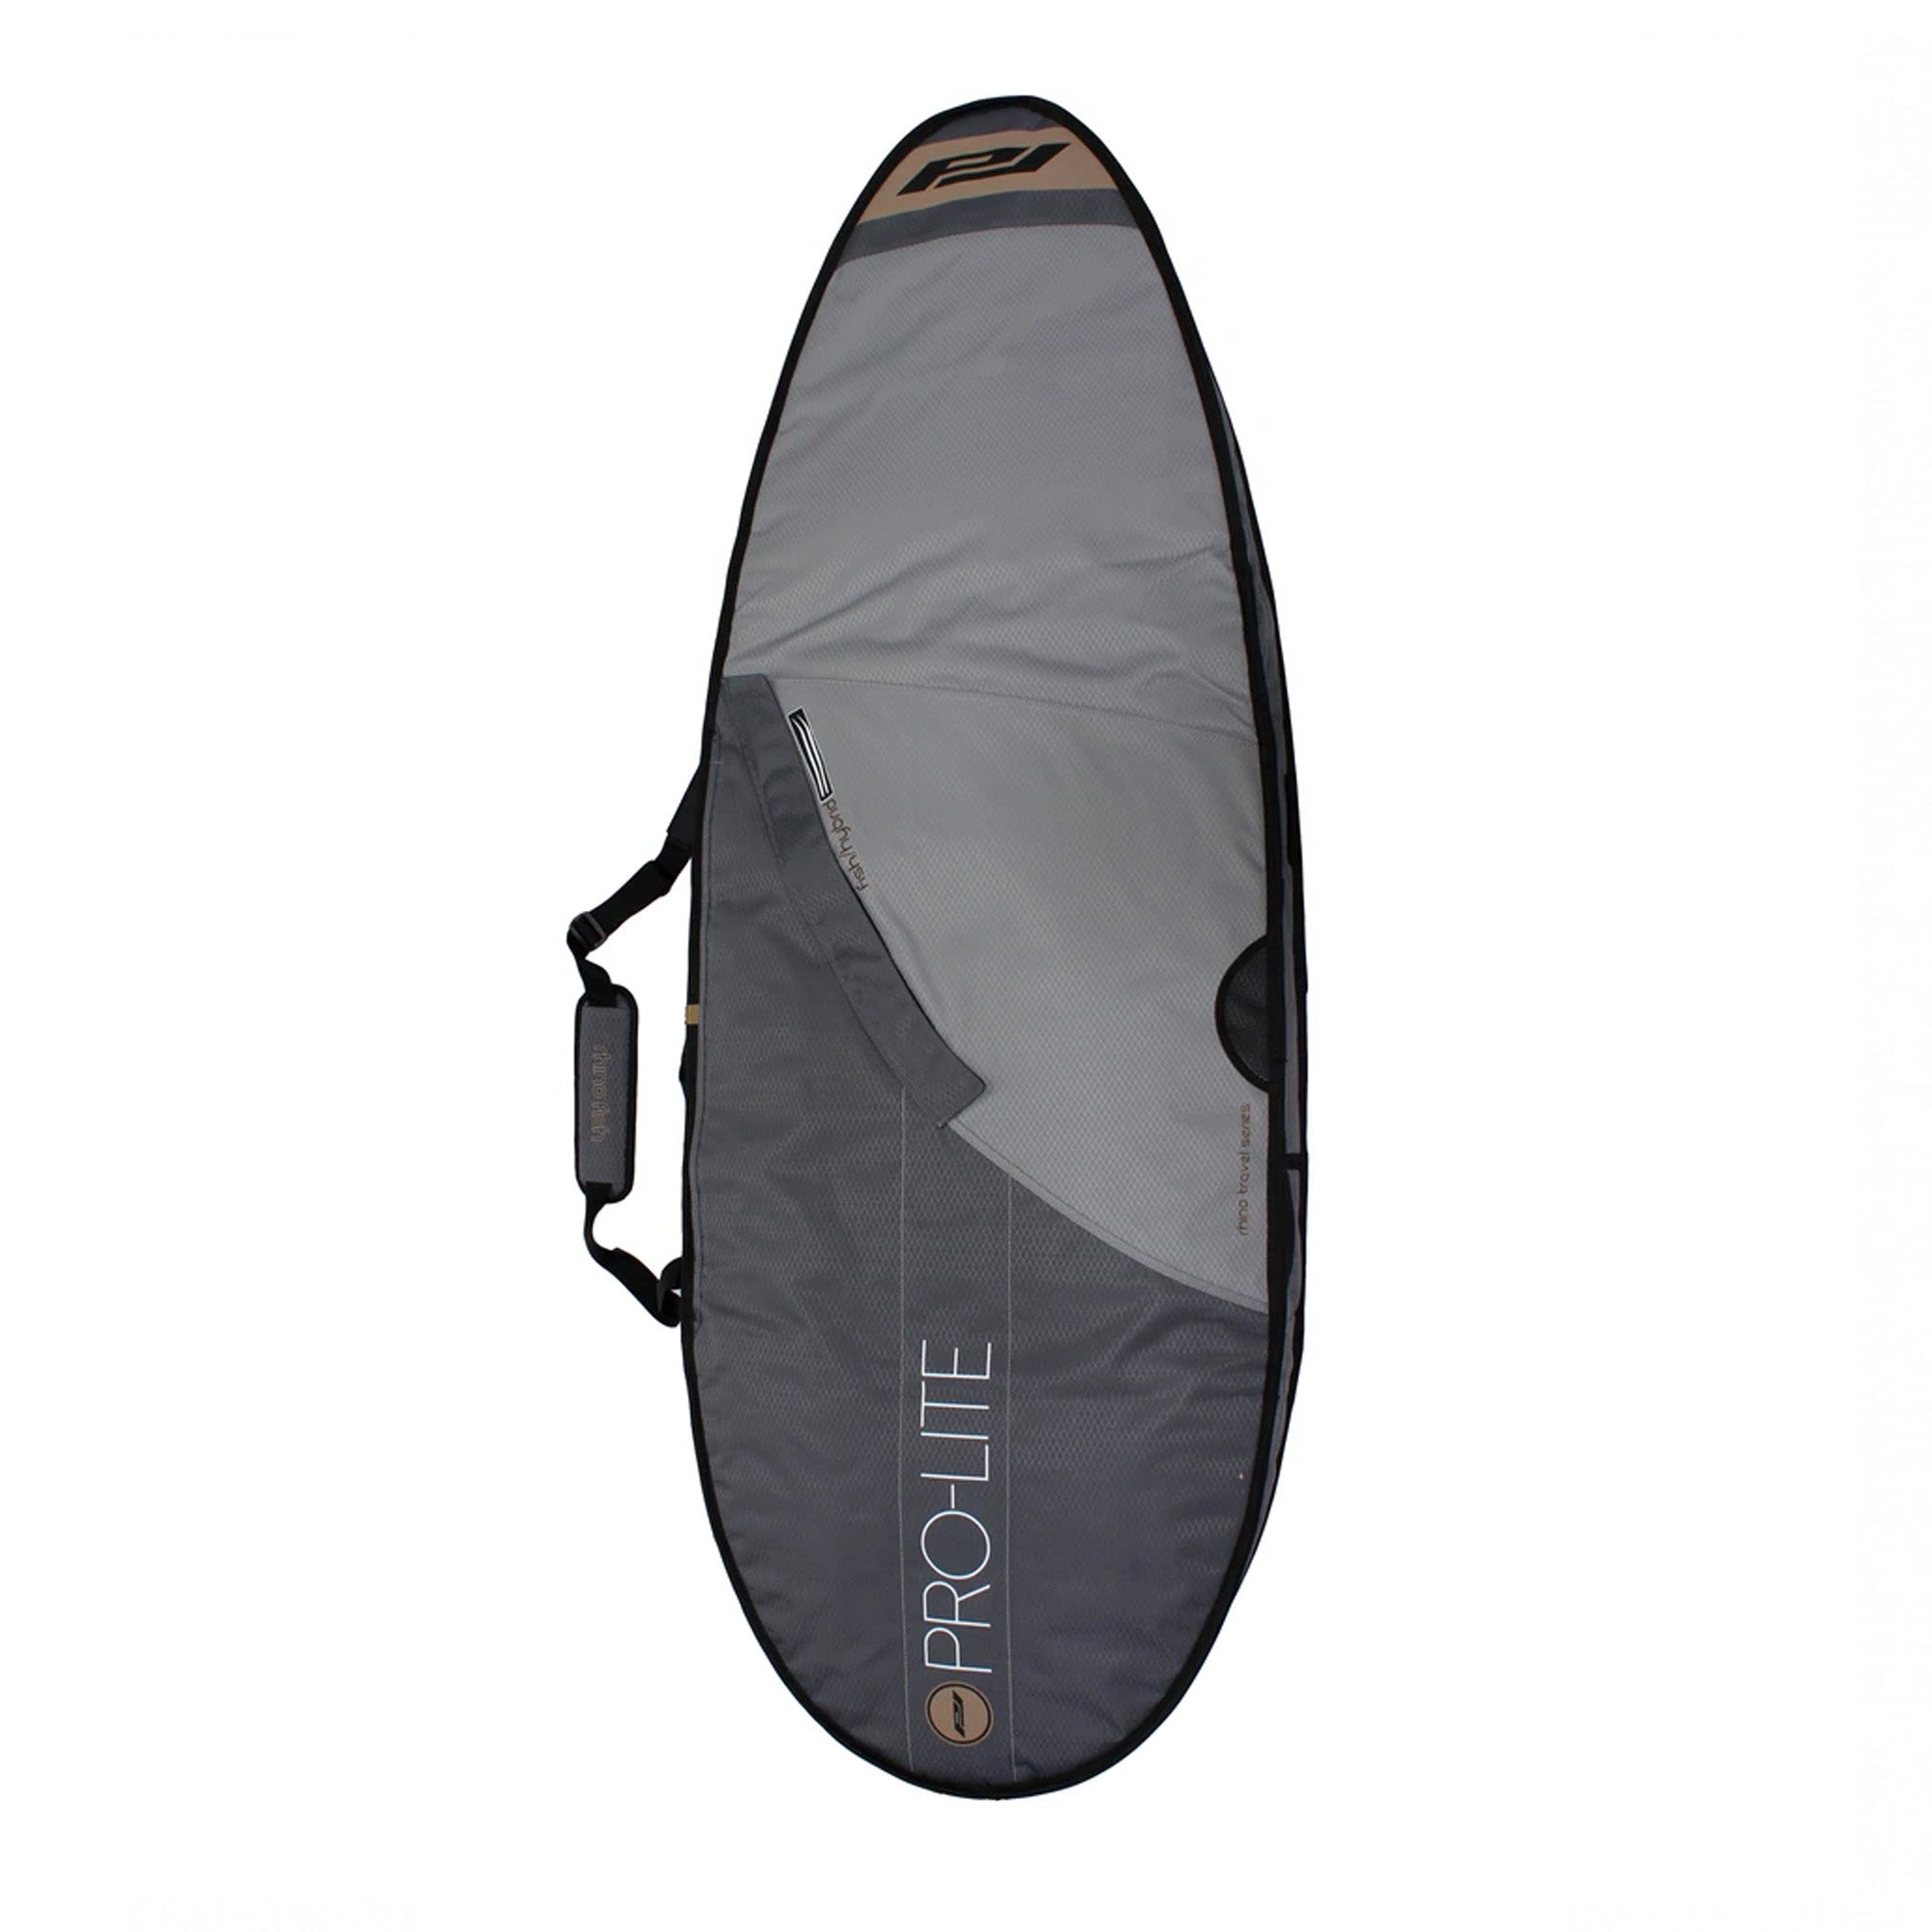 Pro-Lite Rhino Fish/Hybrid Travel Surfboard Bag